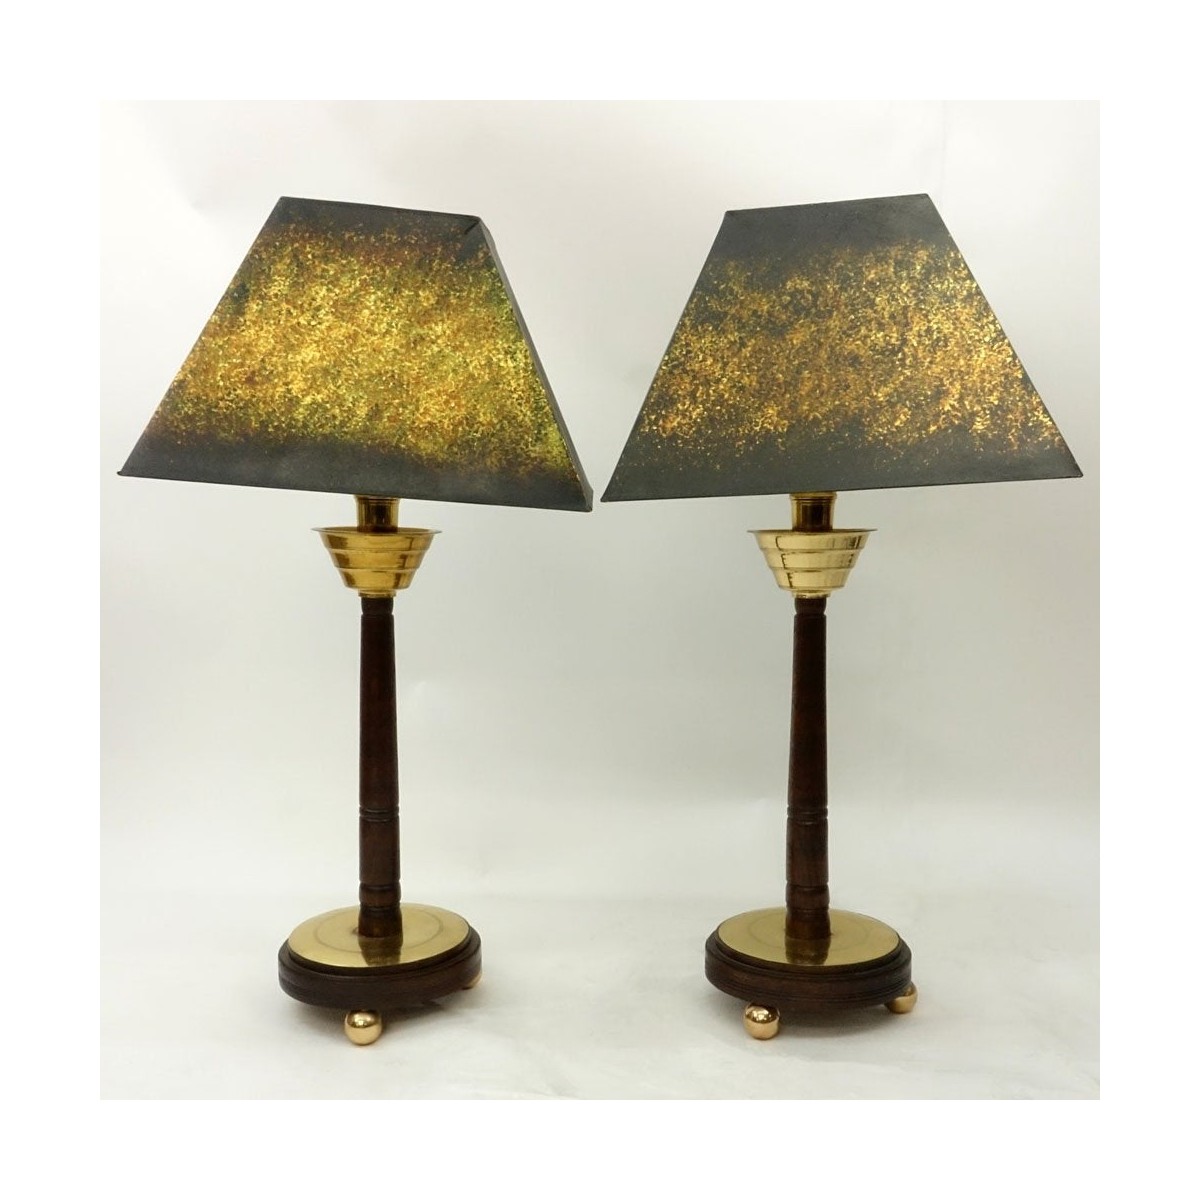 Pair of Danish Modern Style Lamps